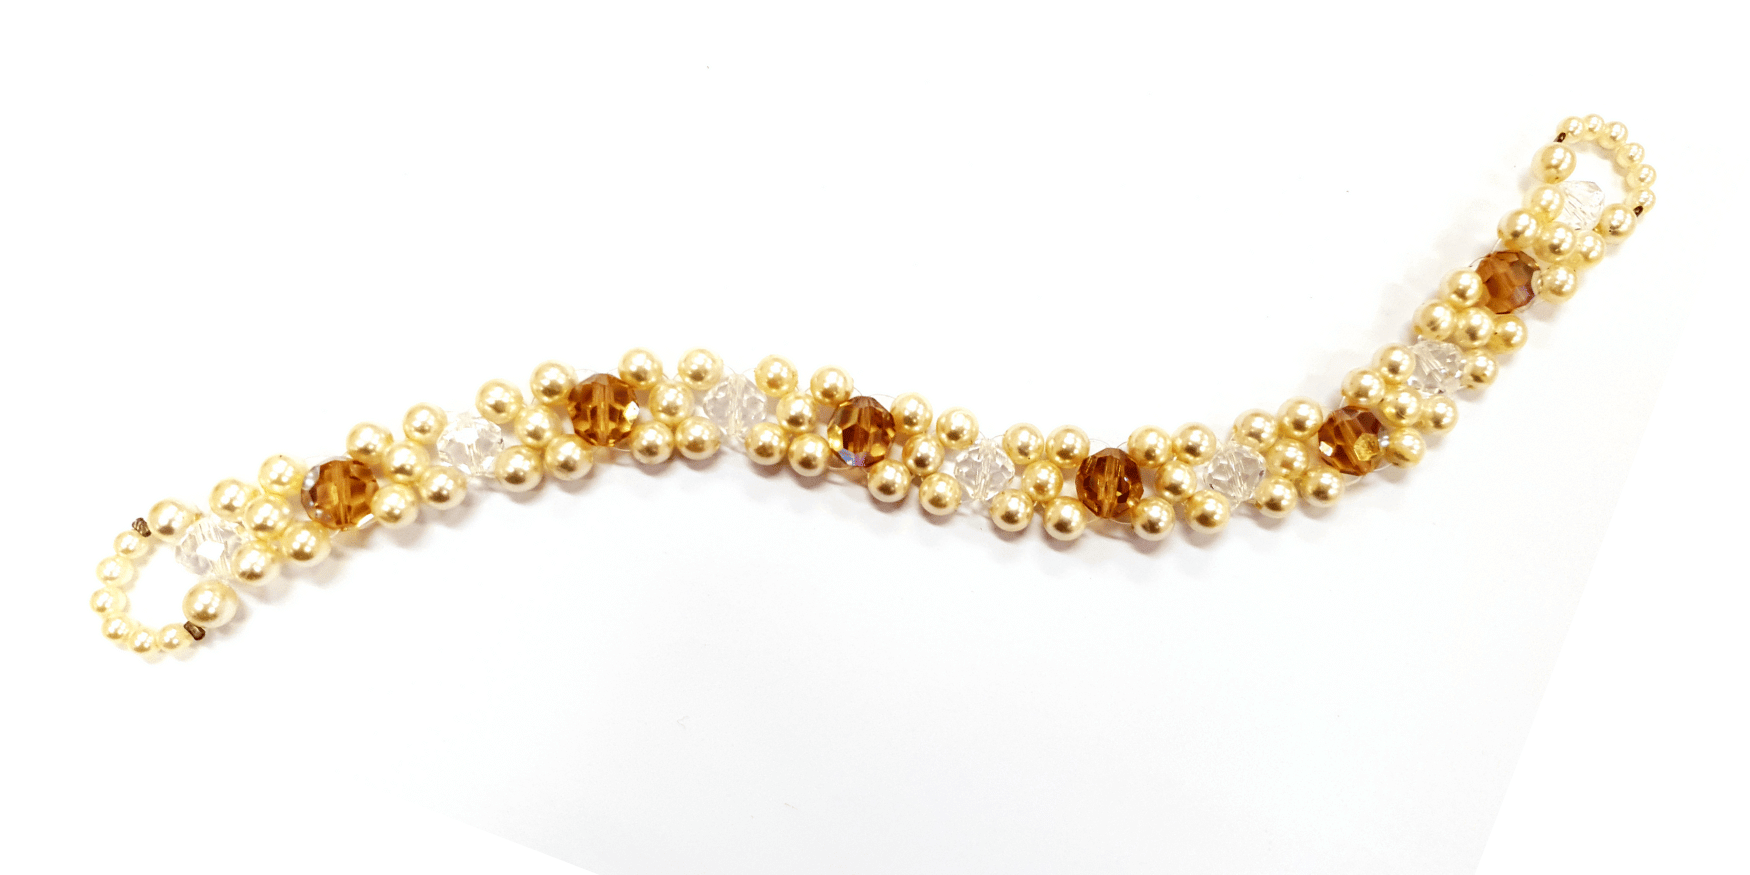 Fashion Jewellery sample - gold beads bracelet